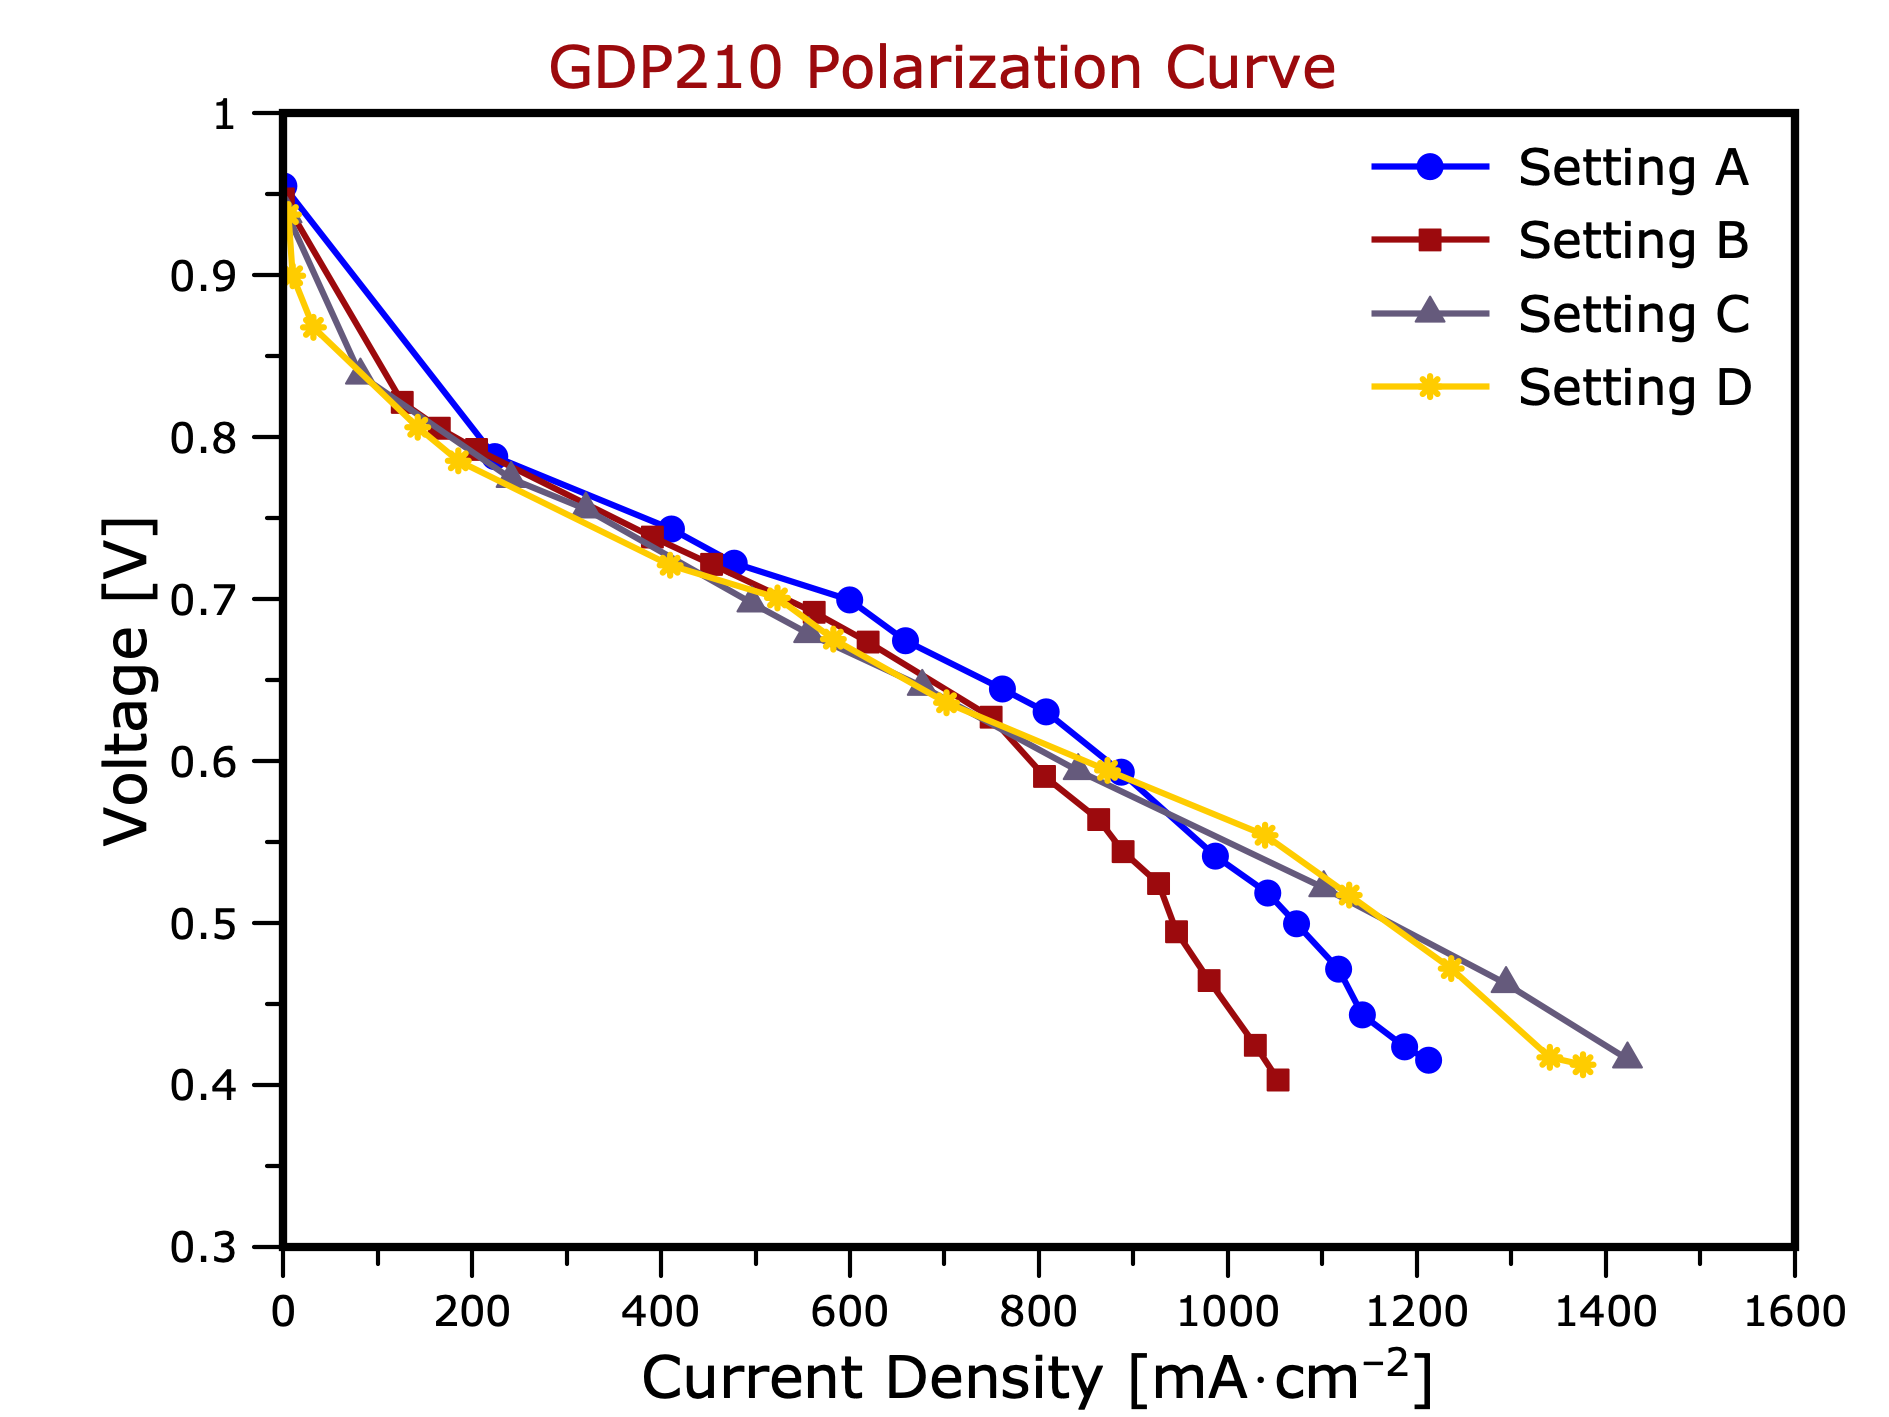 GDP210 Polarization Curve